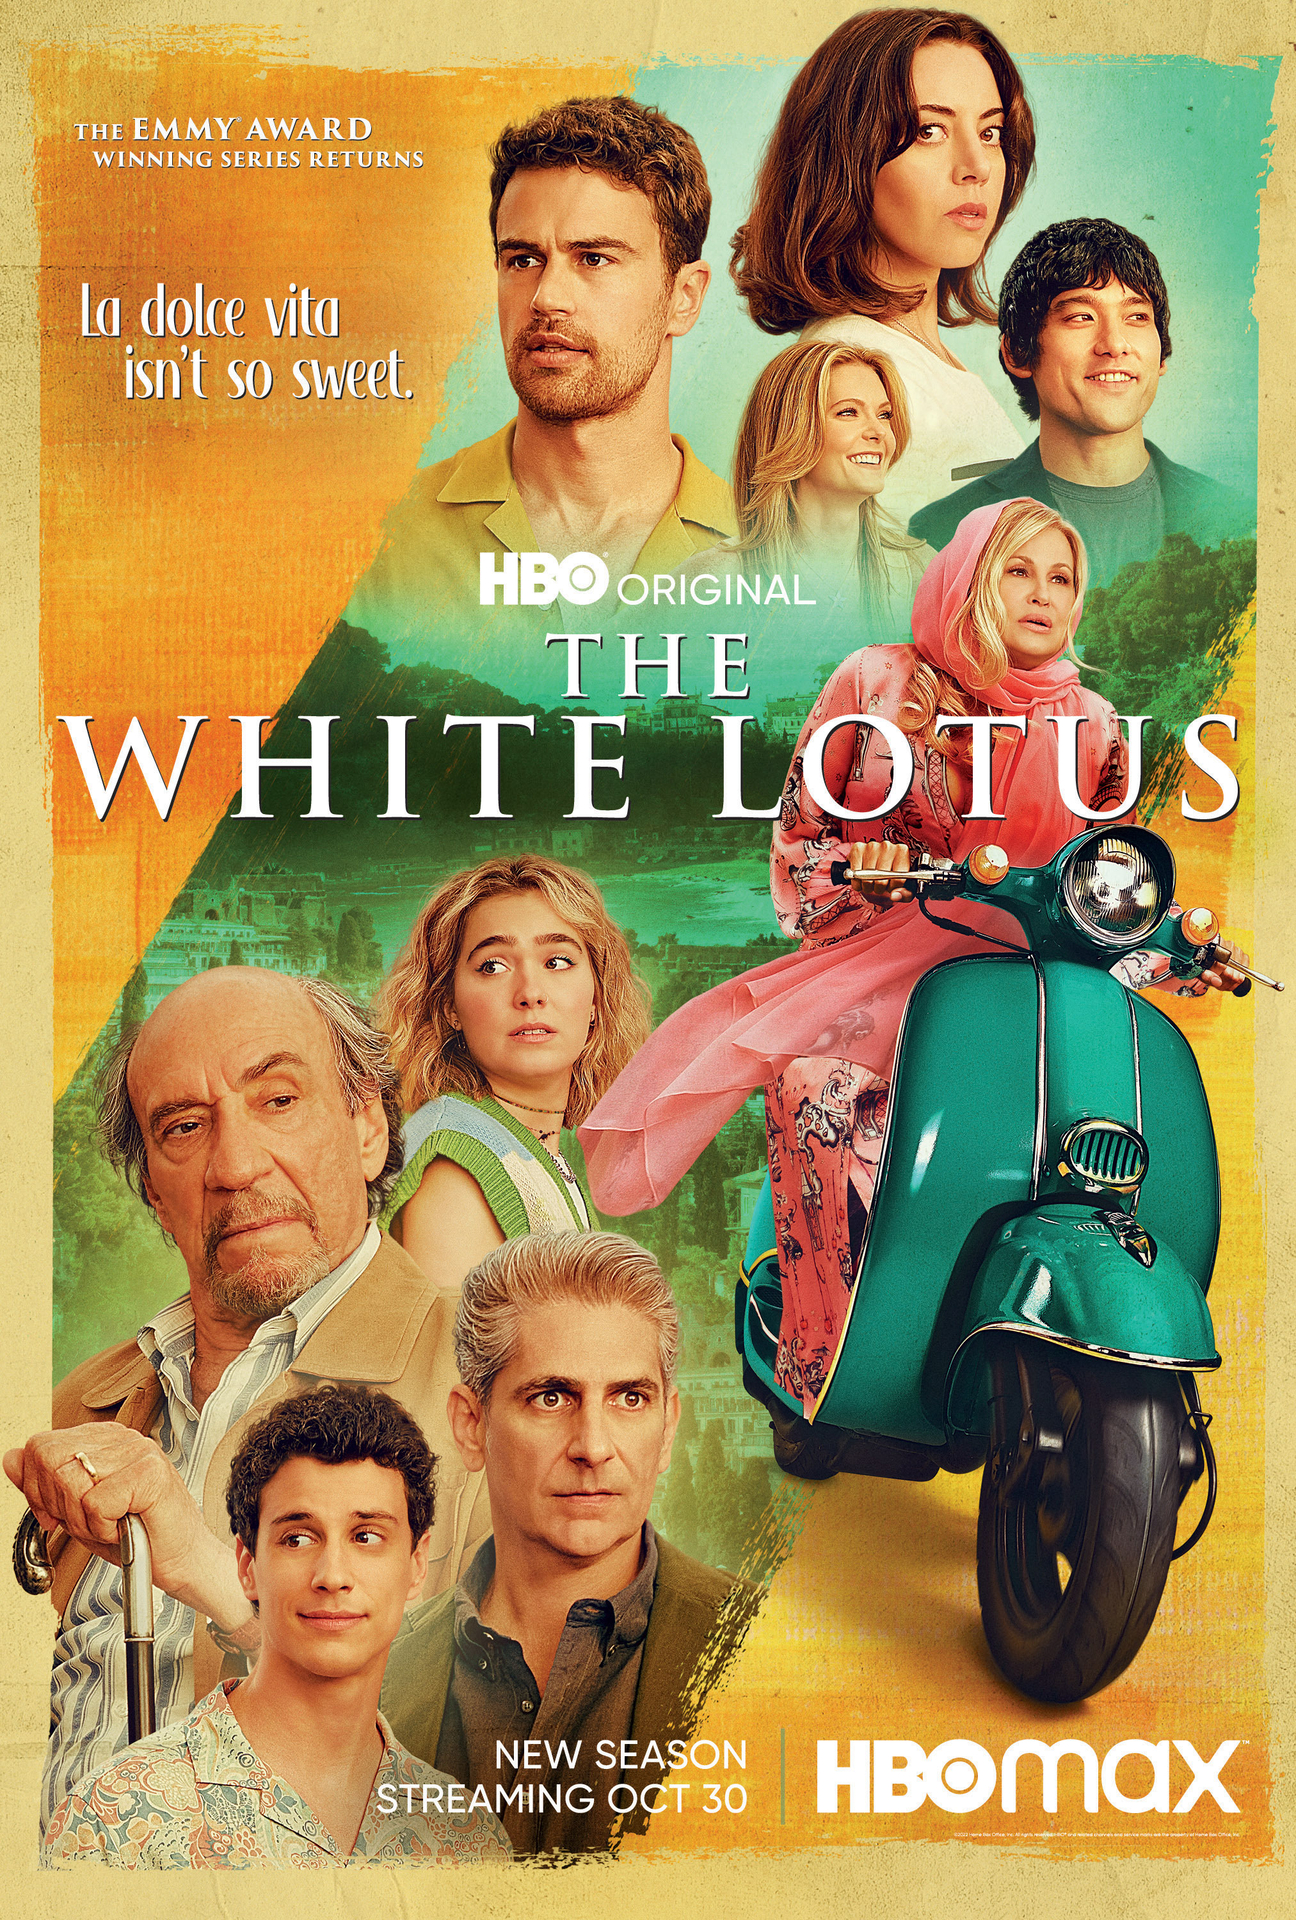 cast of the white lotus - season 1